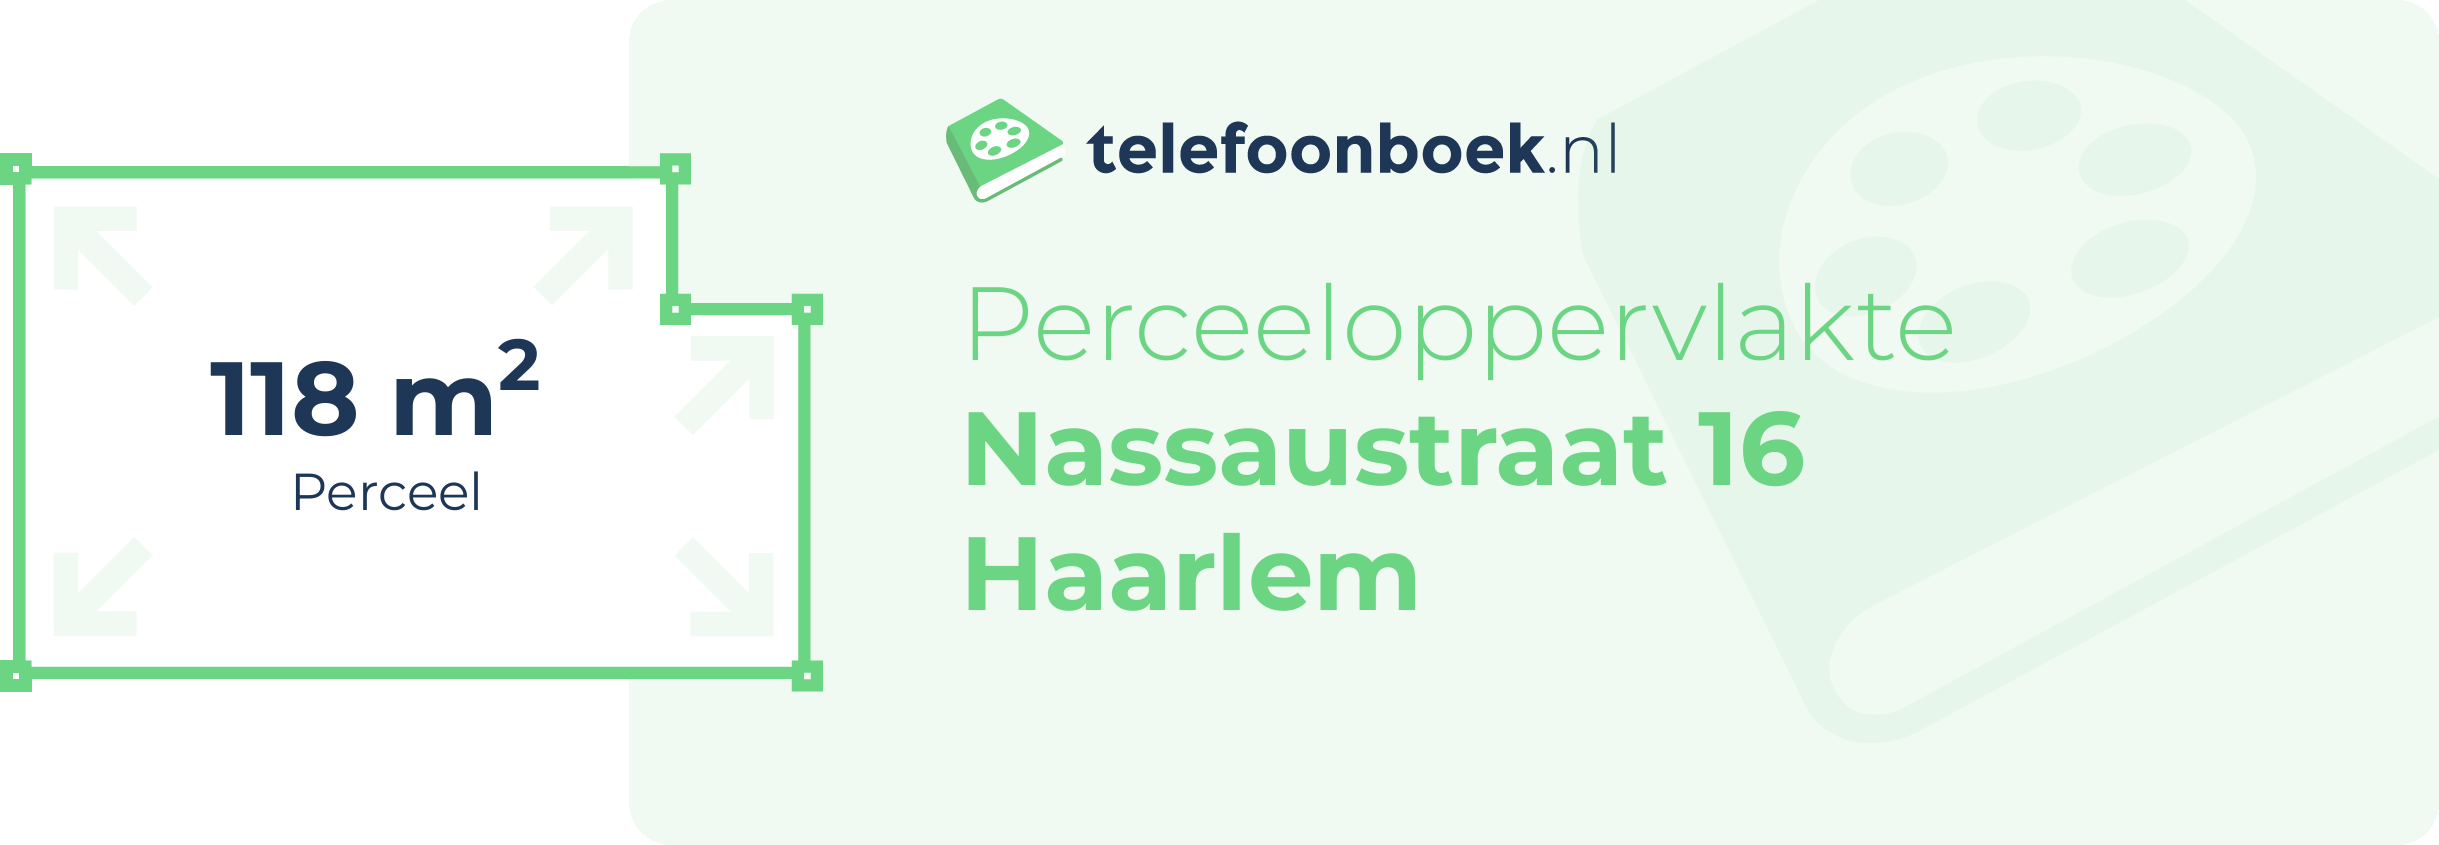 Perceeloppervlakte Nassaustraat 16 Haarlem